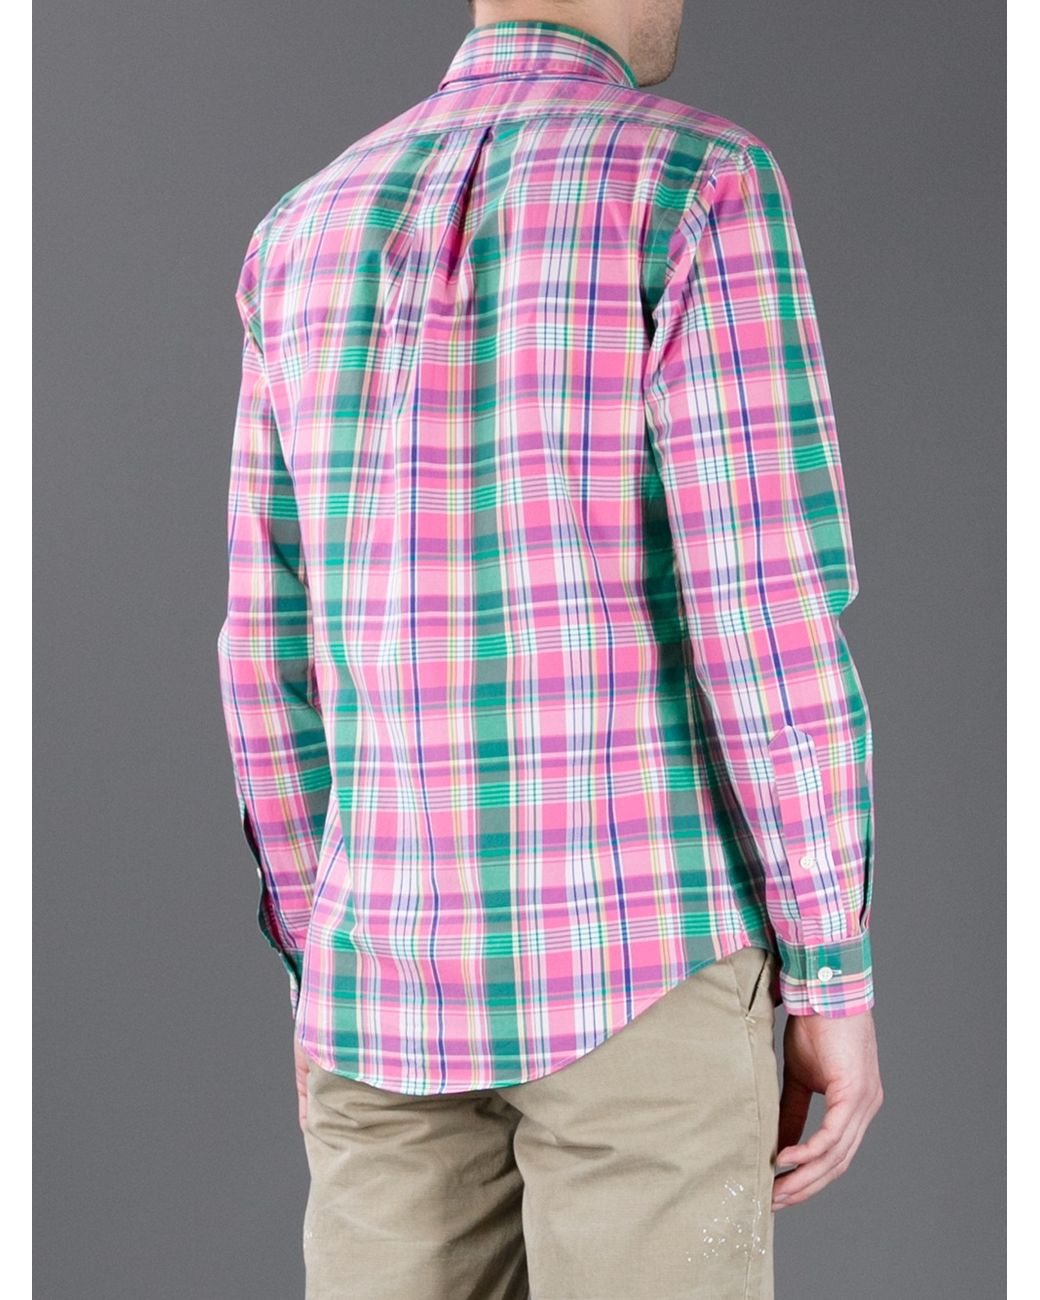 New Ralph Lauren plaid pink shirt Medium classic fit NWT